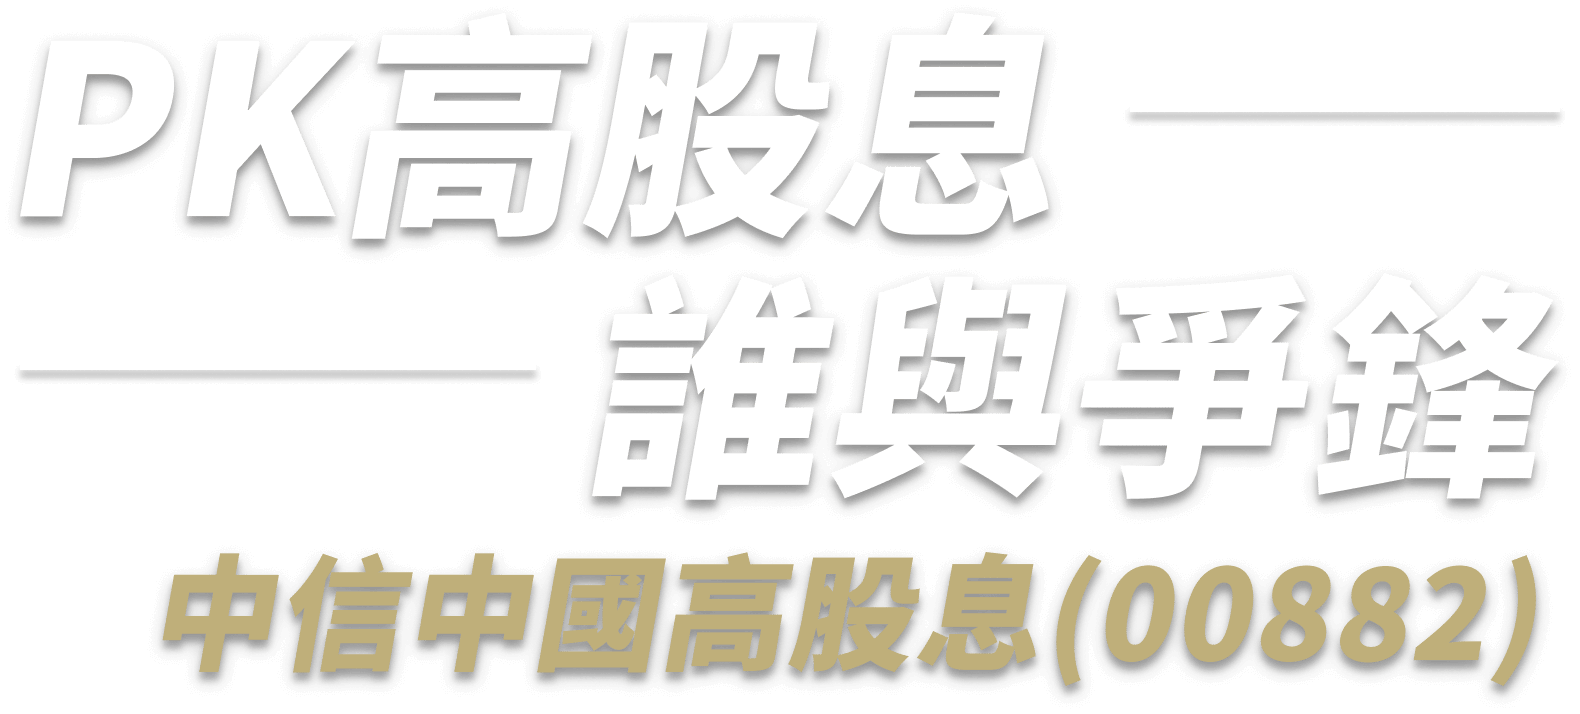 PK高股息 誰與爭鋒 中信中國高股息(00882)